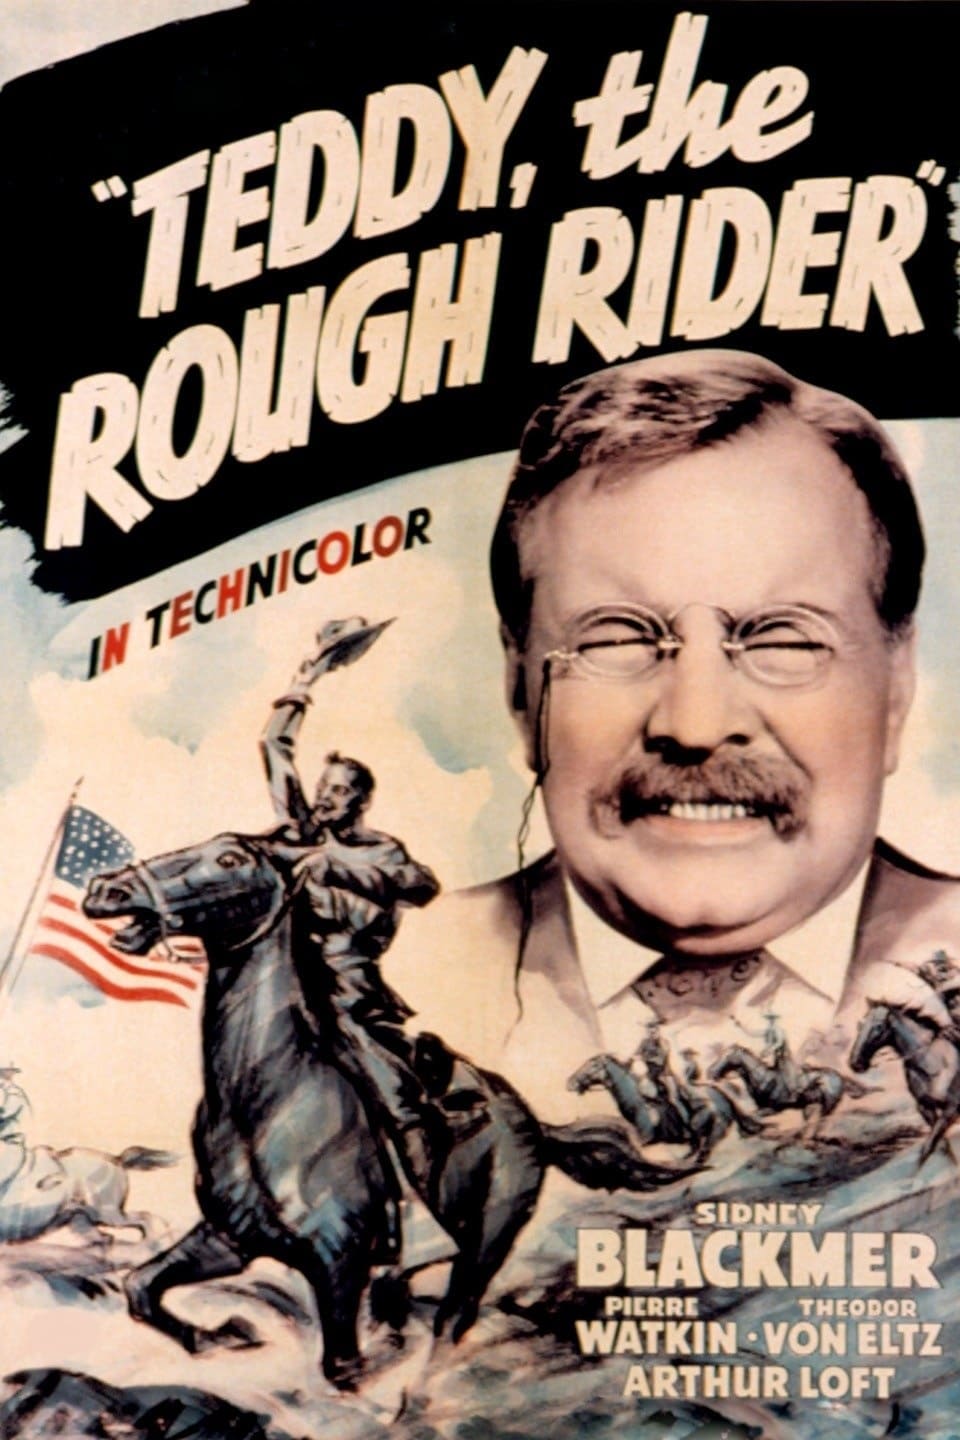 Teddy the Rough Rider (1940)